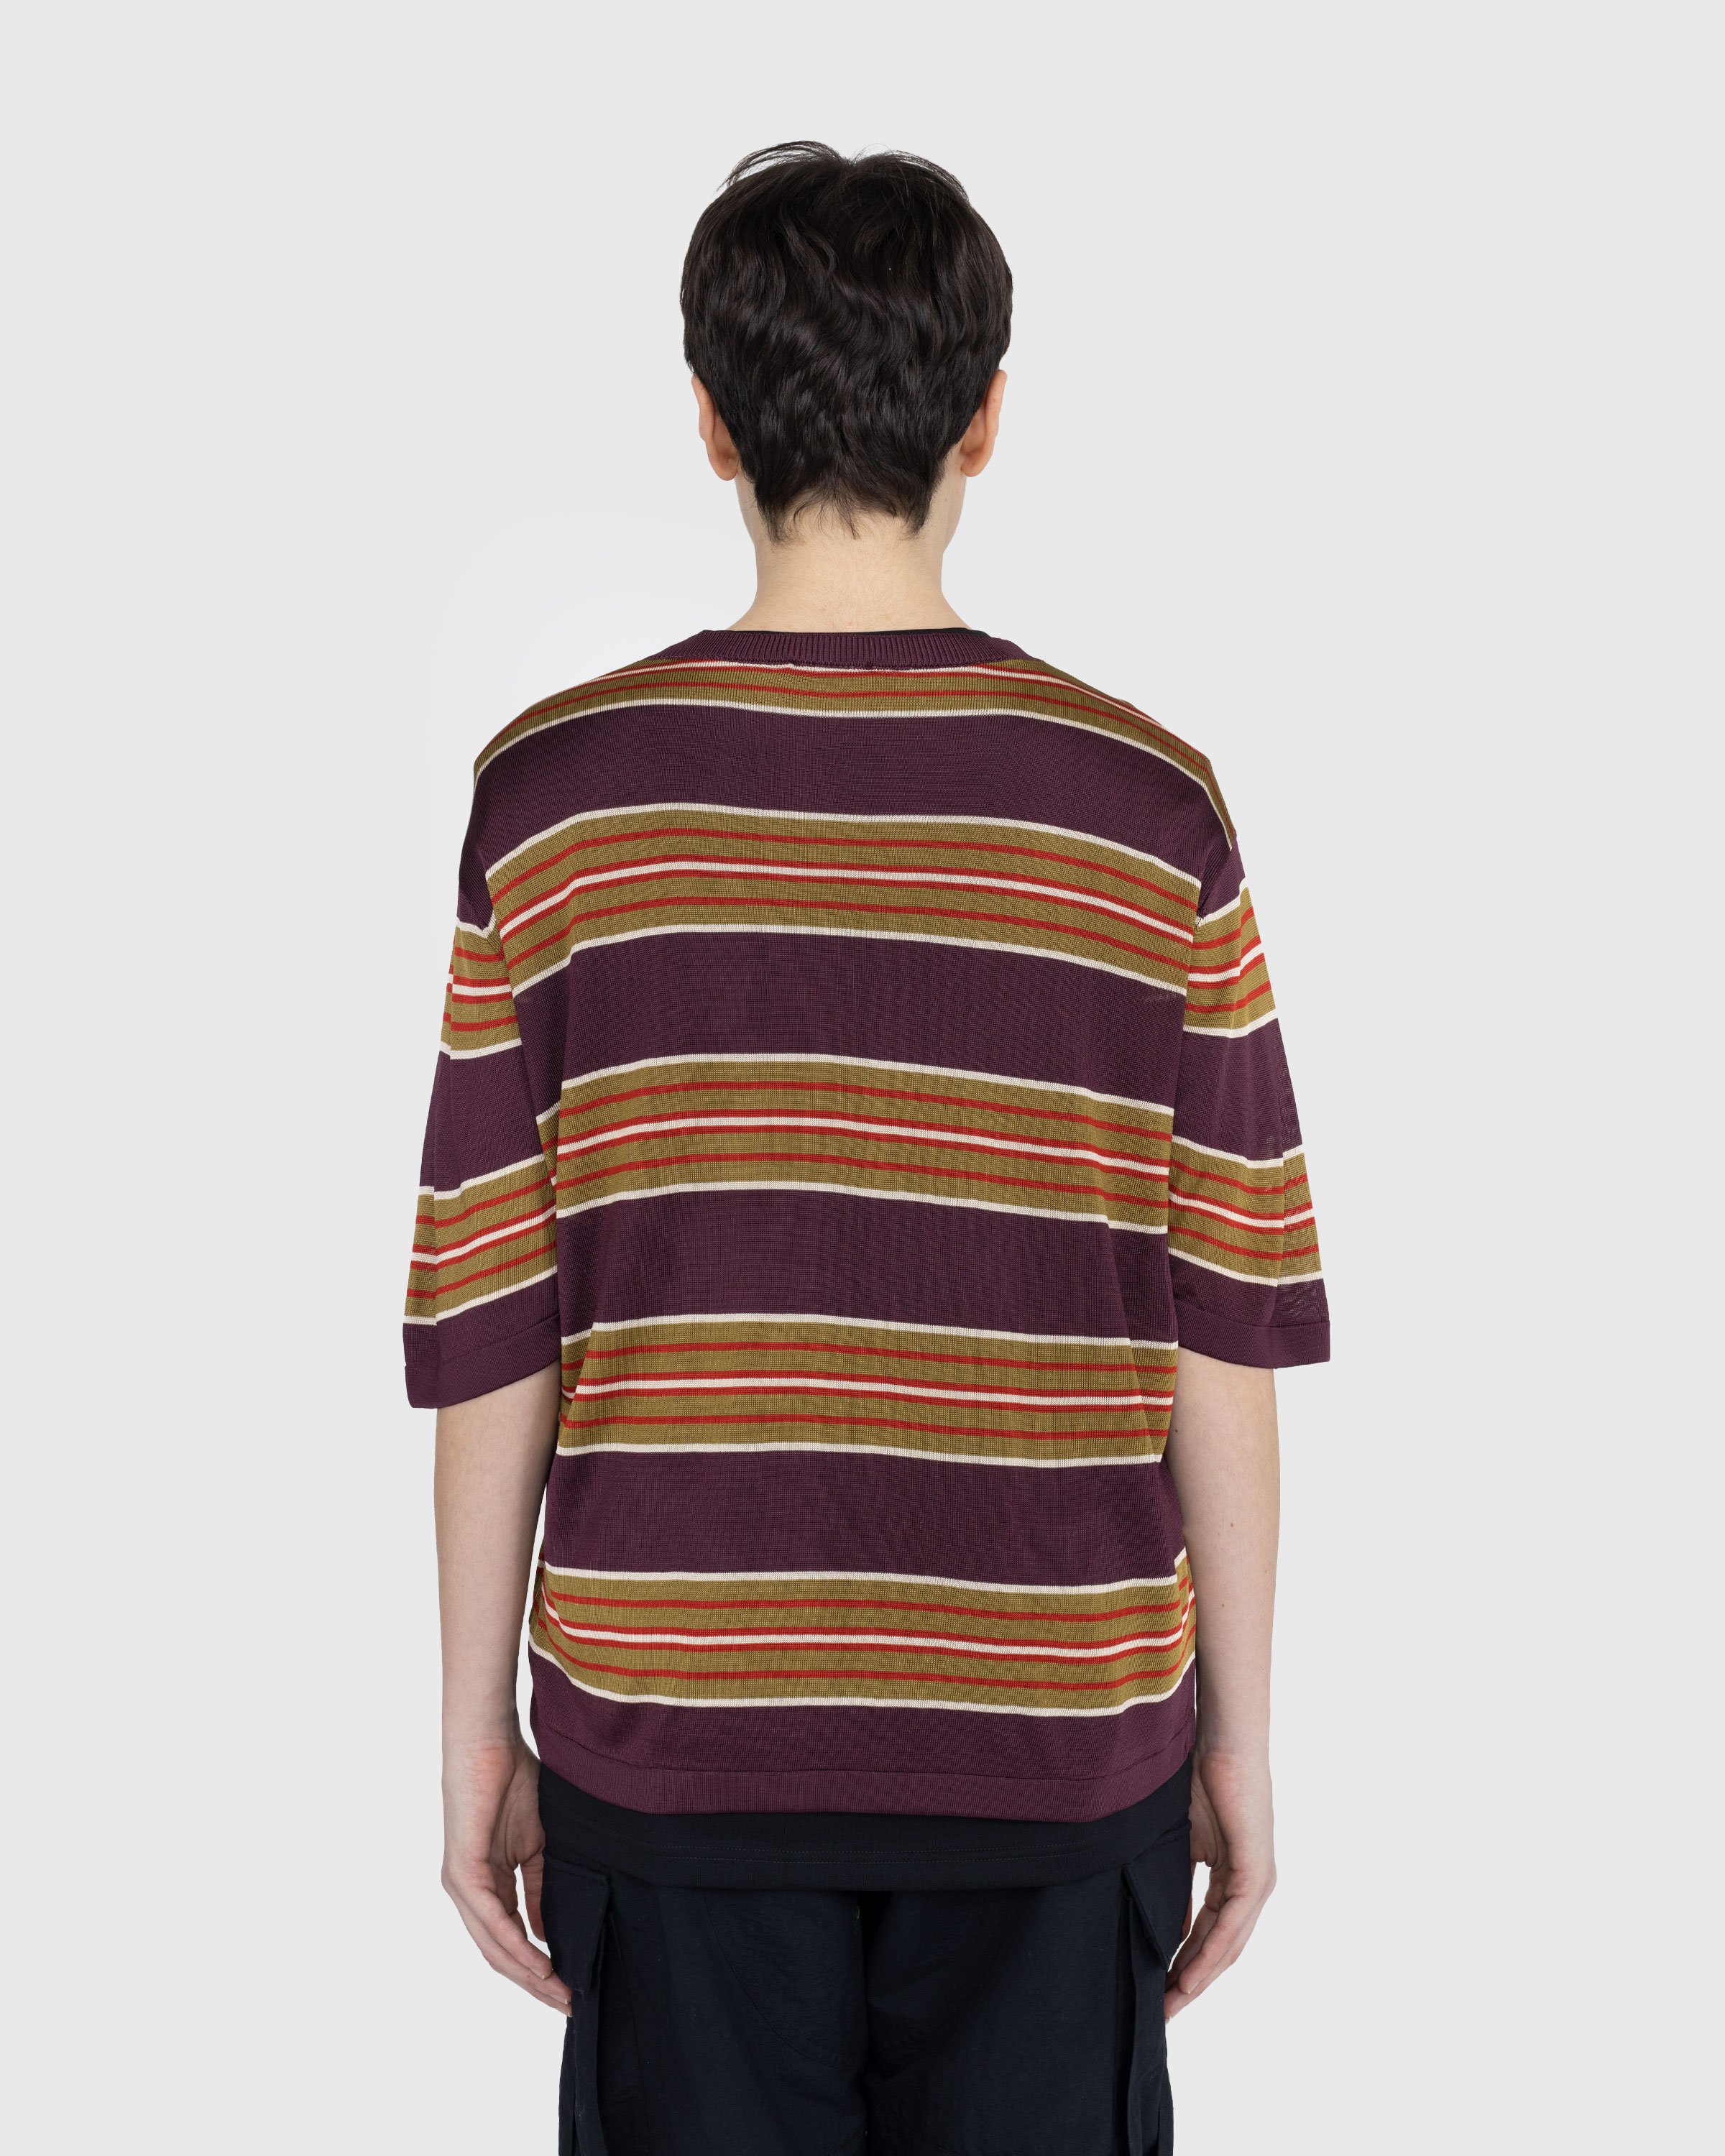 Dries van Noten - Mias Knit T-Shirt Burgundy - Clothing - Red - Image 4